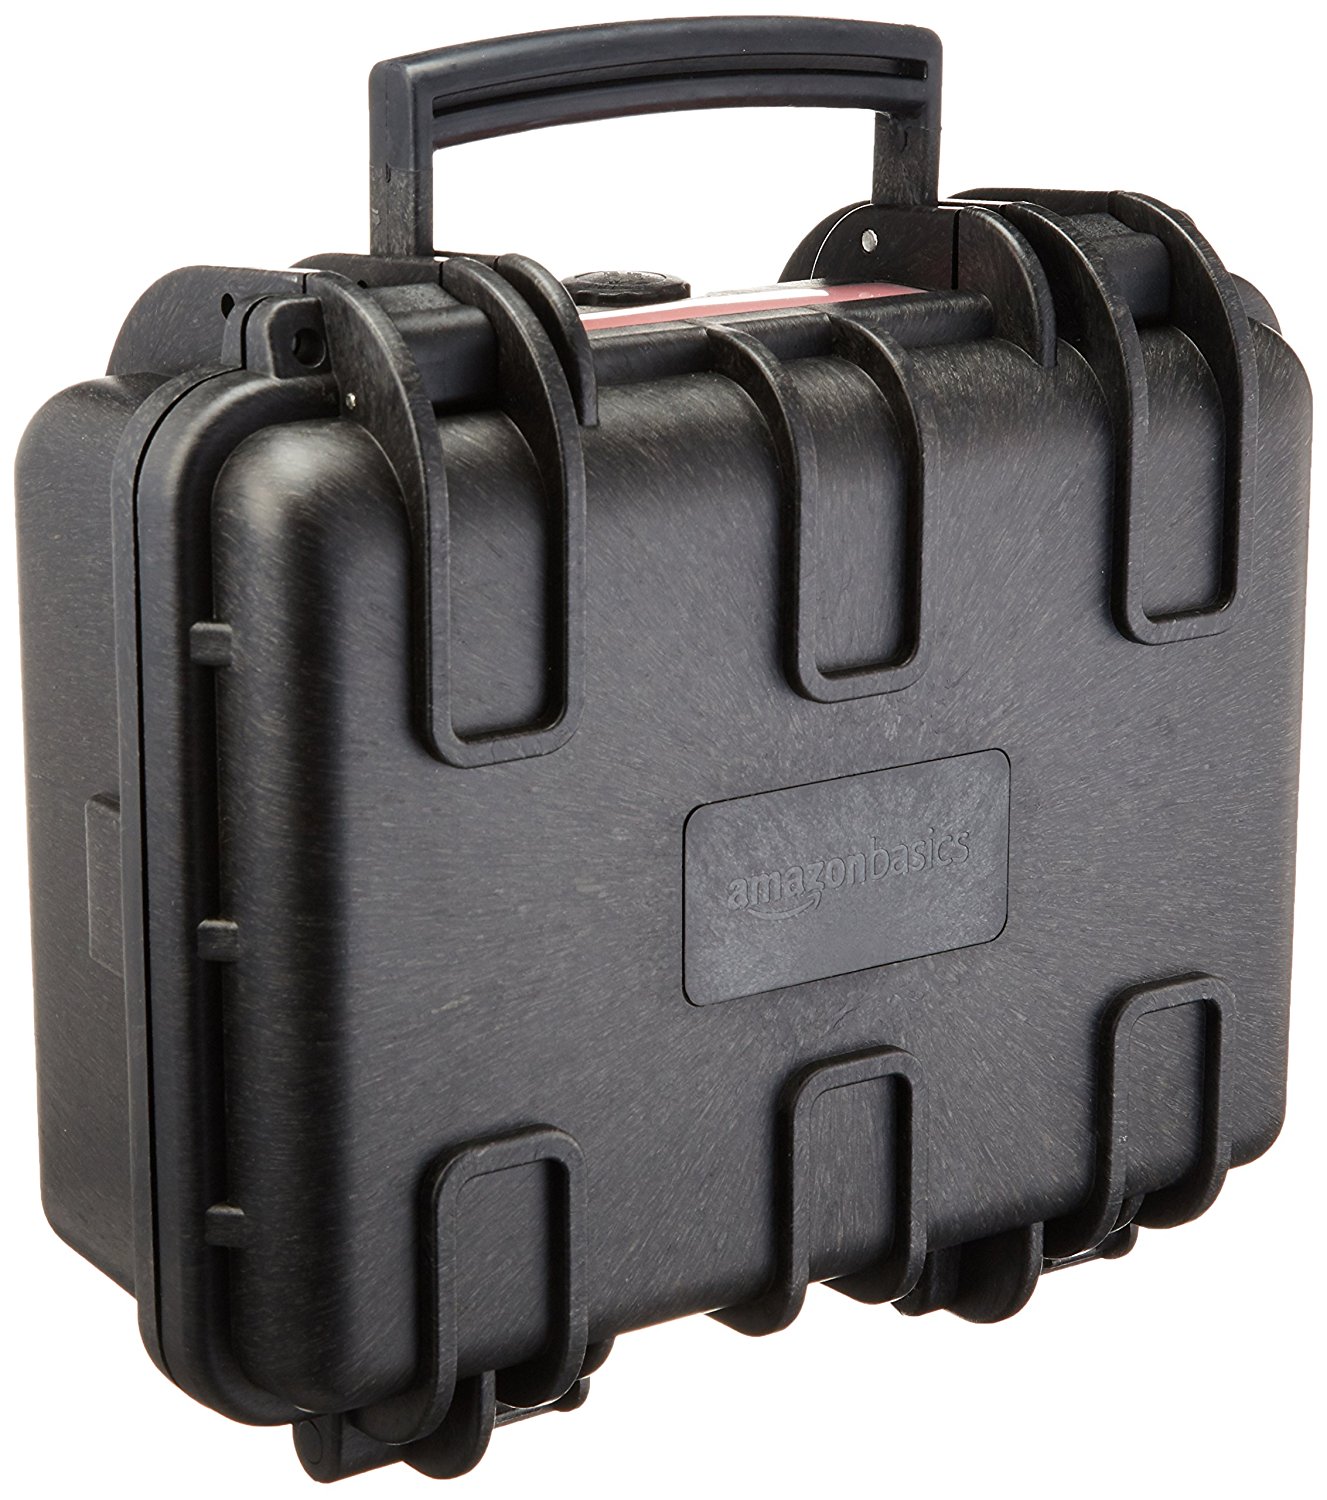 AmazonBasics small camera case, best camera case, slr camera case, camera lens case